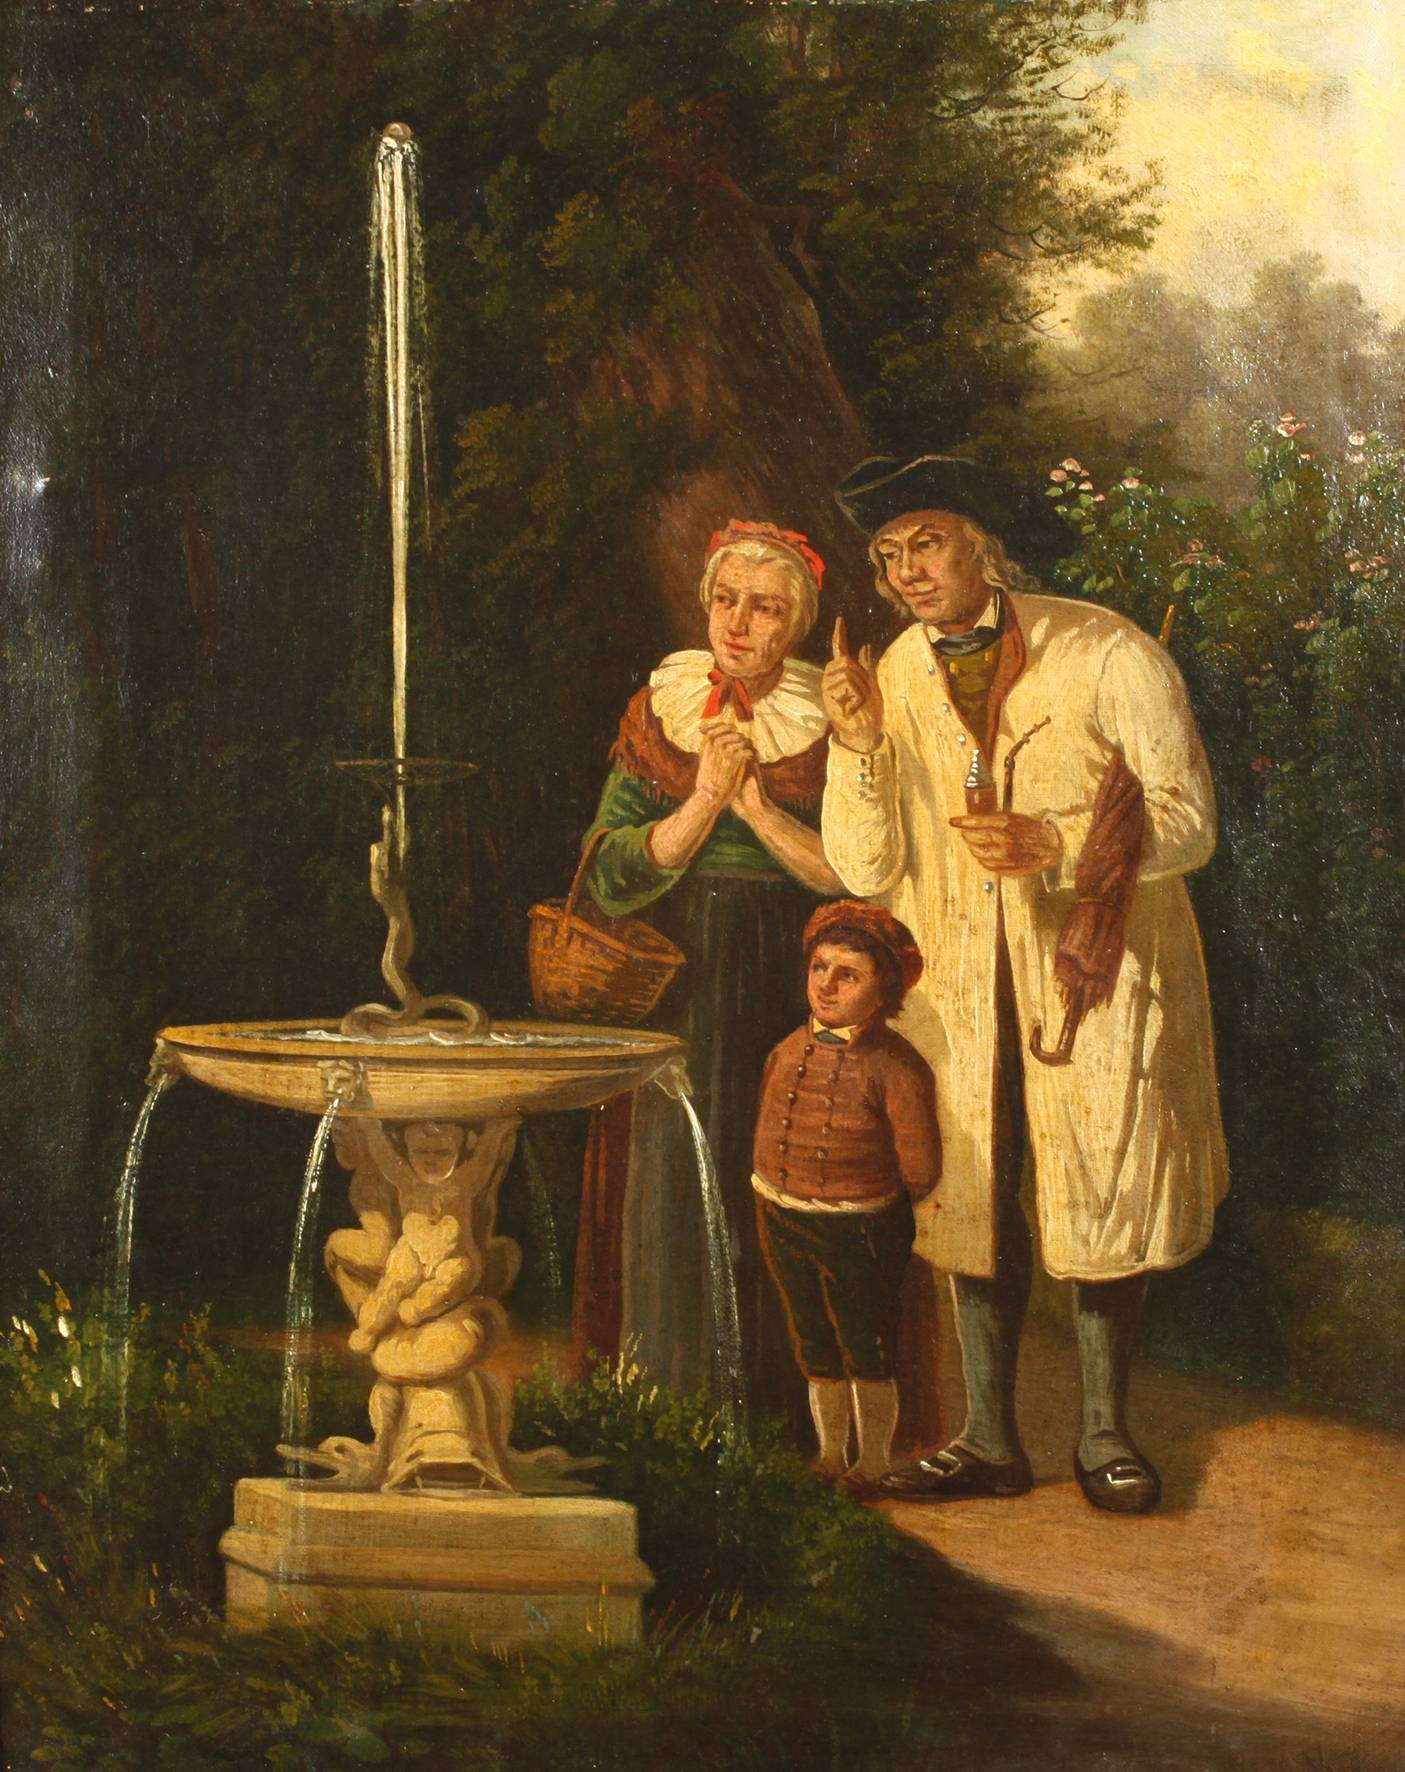 Familie am Brunnen